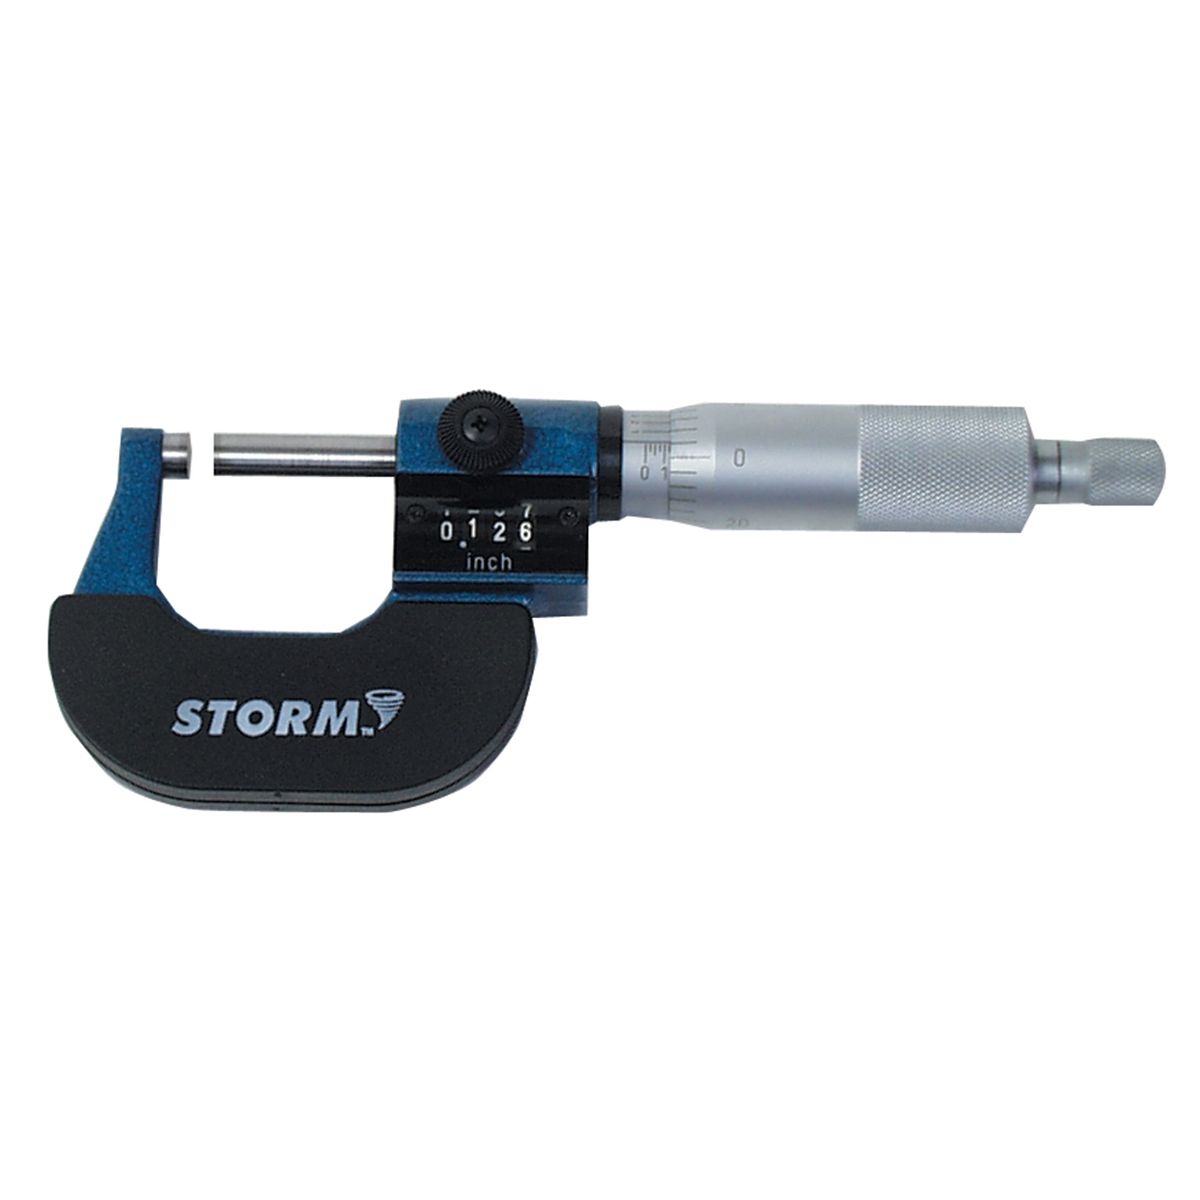 Storm Mechanical Digital Micrometer